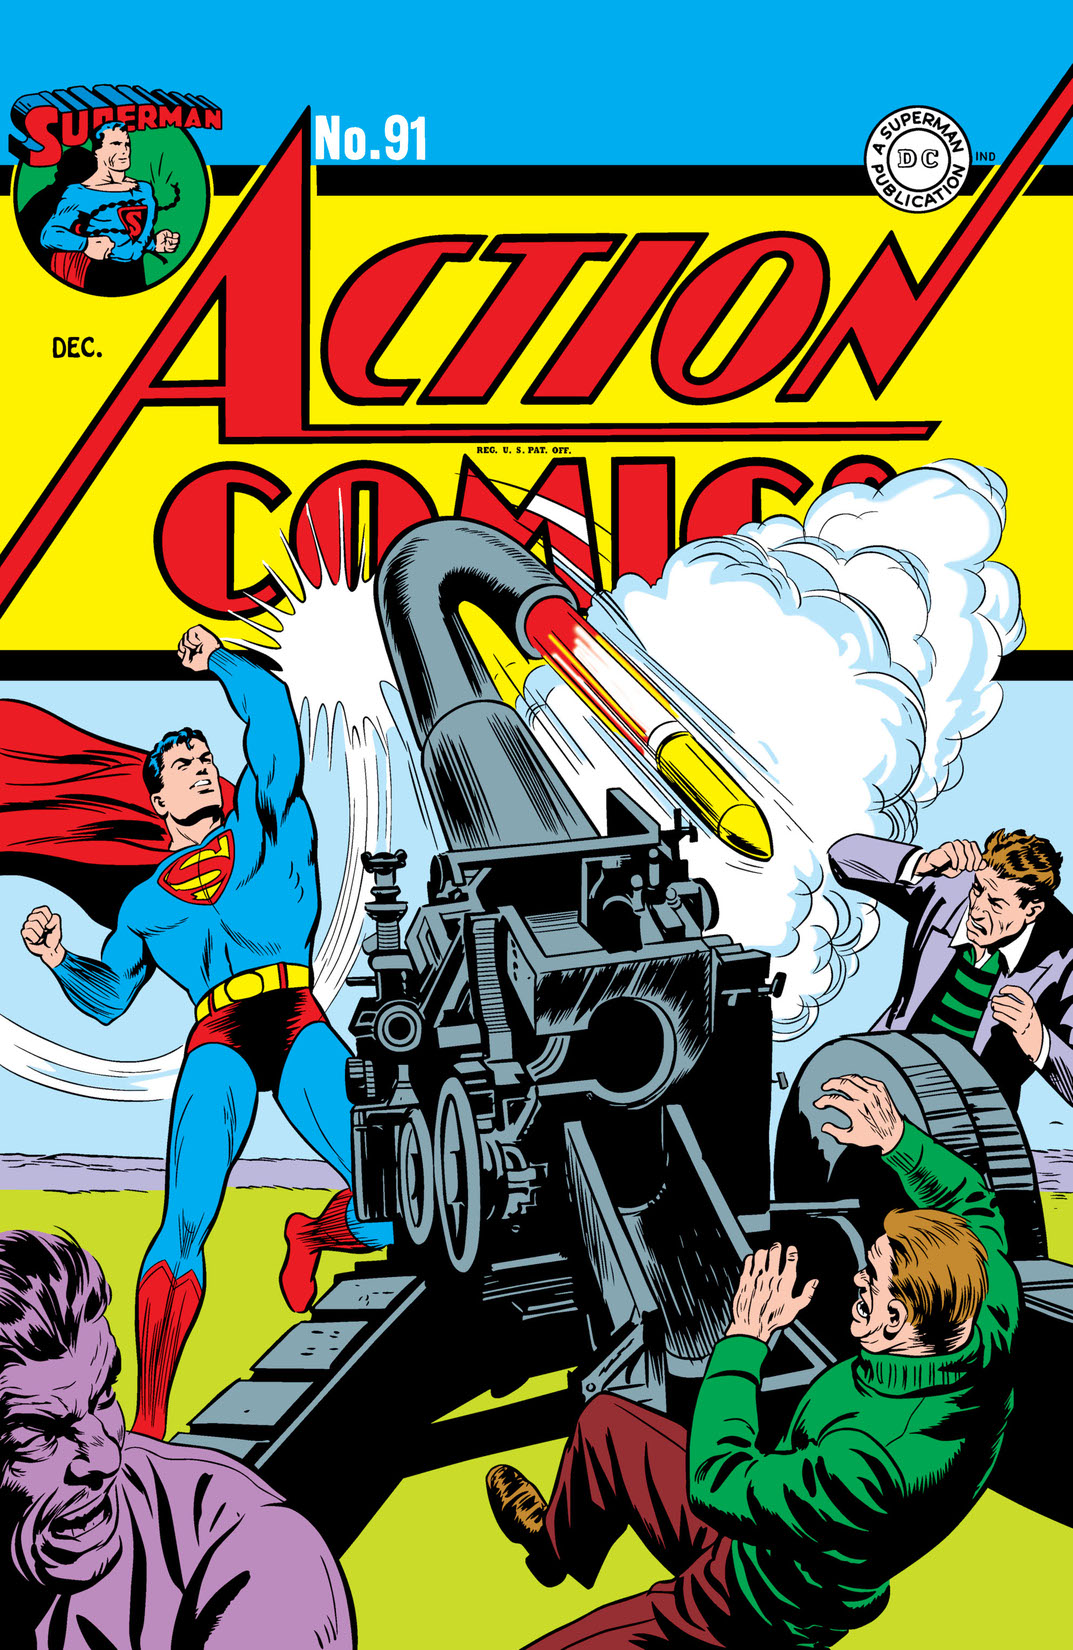 Action Comics (1938-) #91-92 preview images